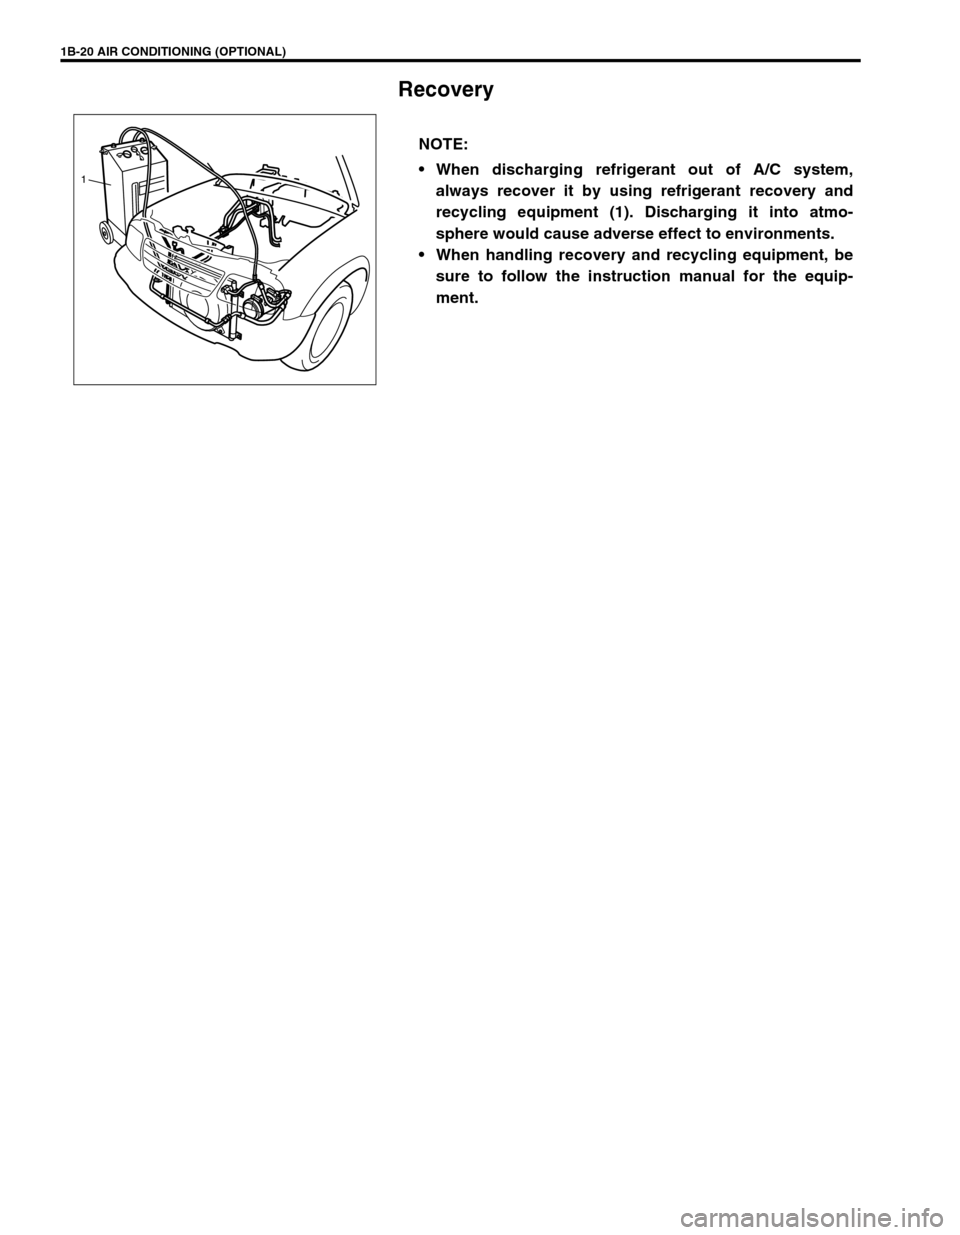 SUZUKI GRAND VITARA 1999 2.G Owners Manual 1B-20 AIR CONDITIONING (OPTIONAL)
Recovery
NOTE:
When discharging refrigerant out of A/C system,
always recover it by using refrigerant recovery and
recycling equipment (1). Discharging it into atmo-